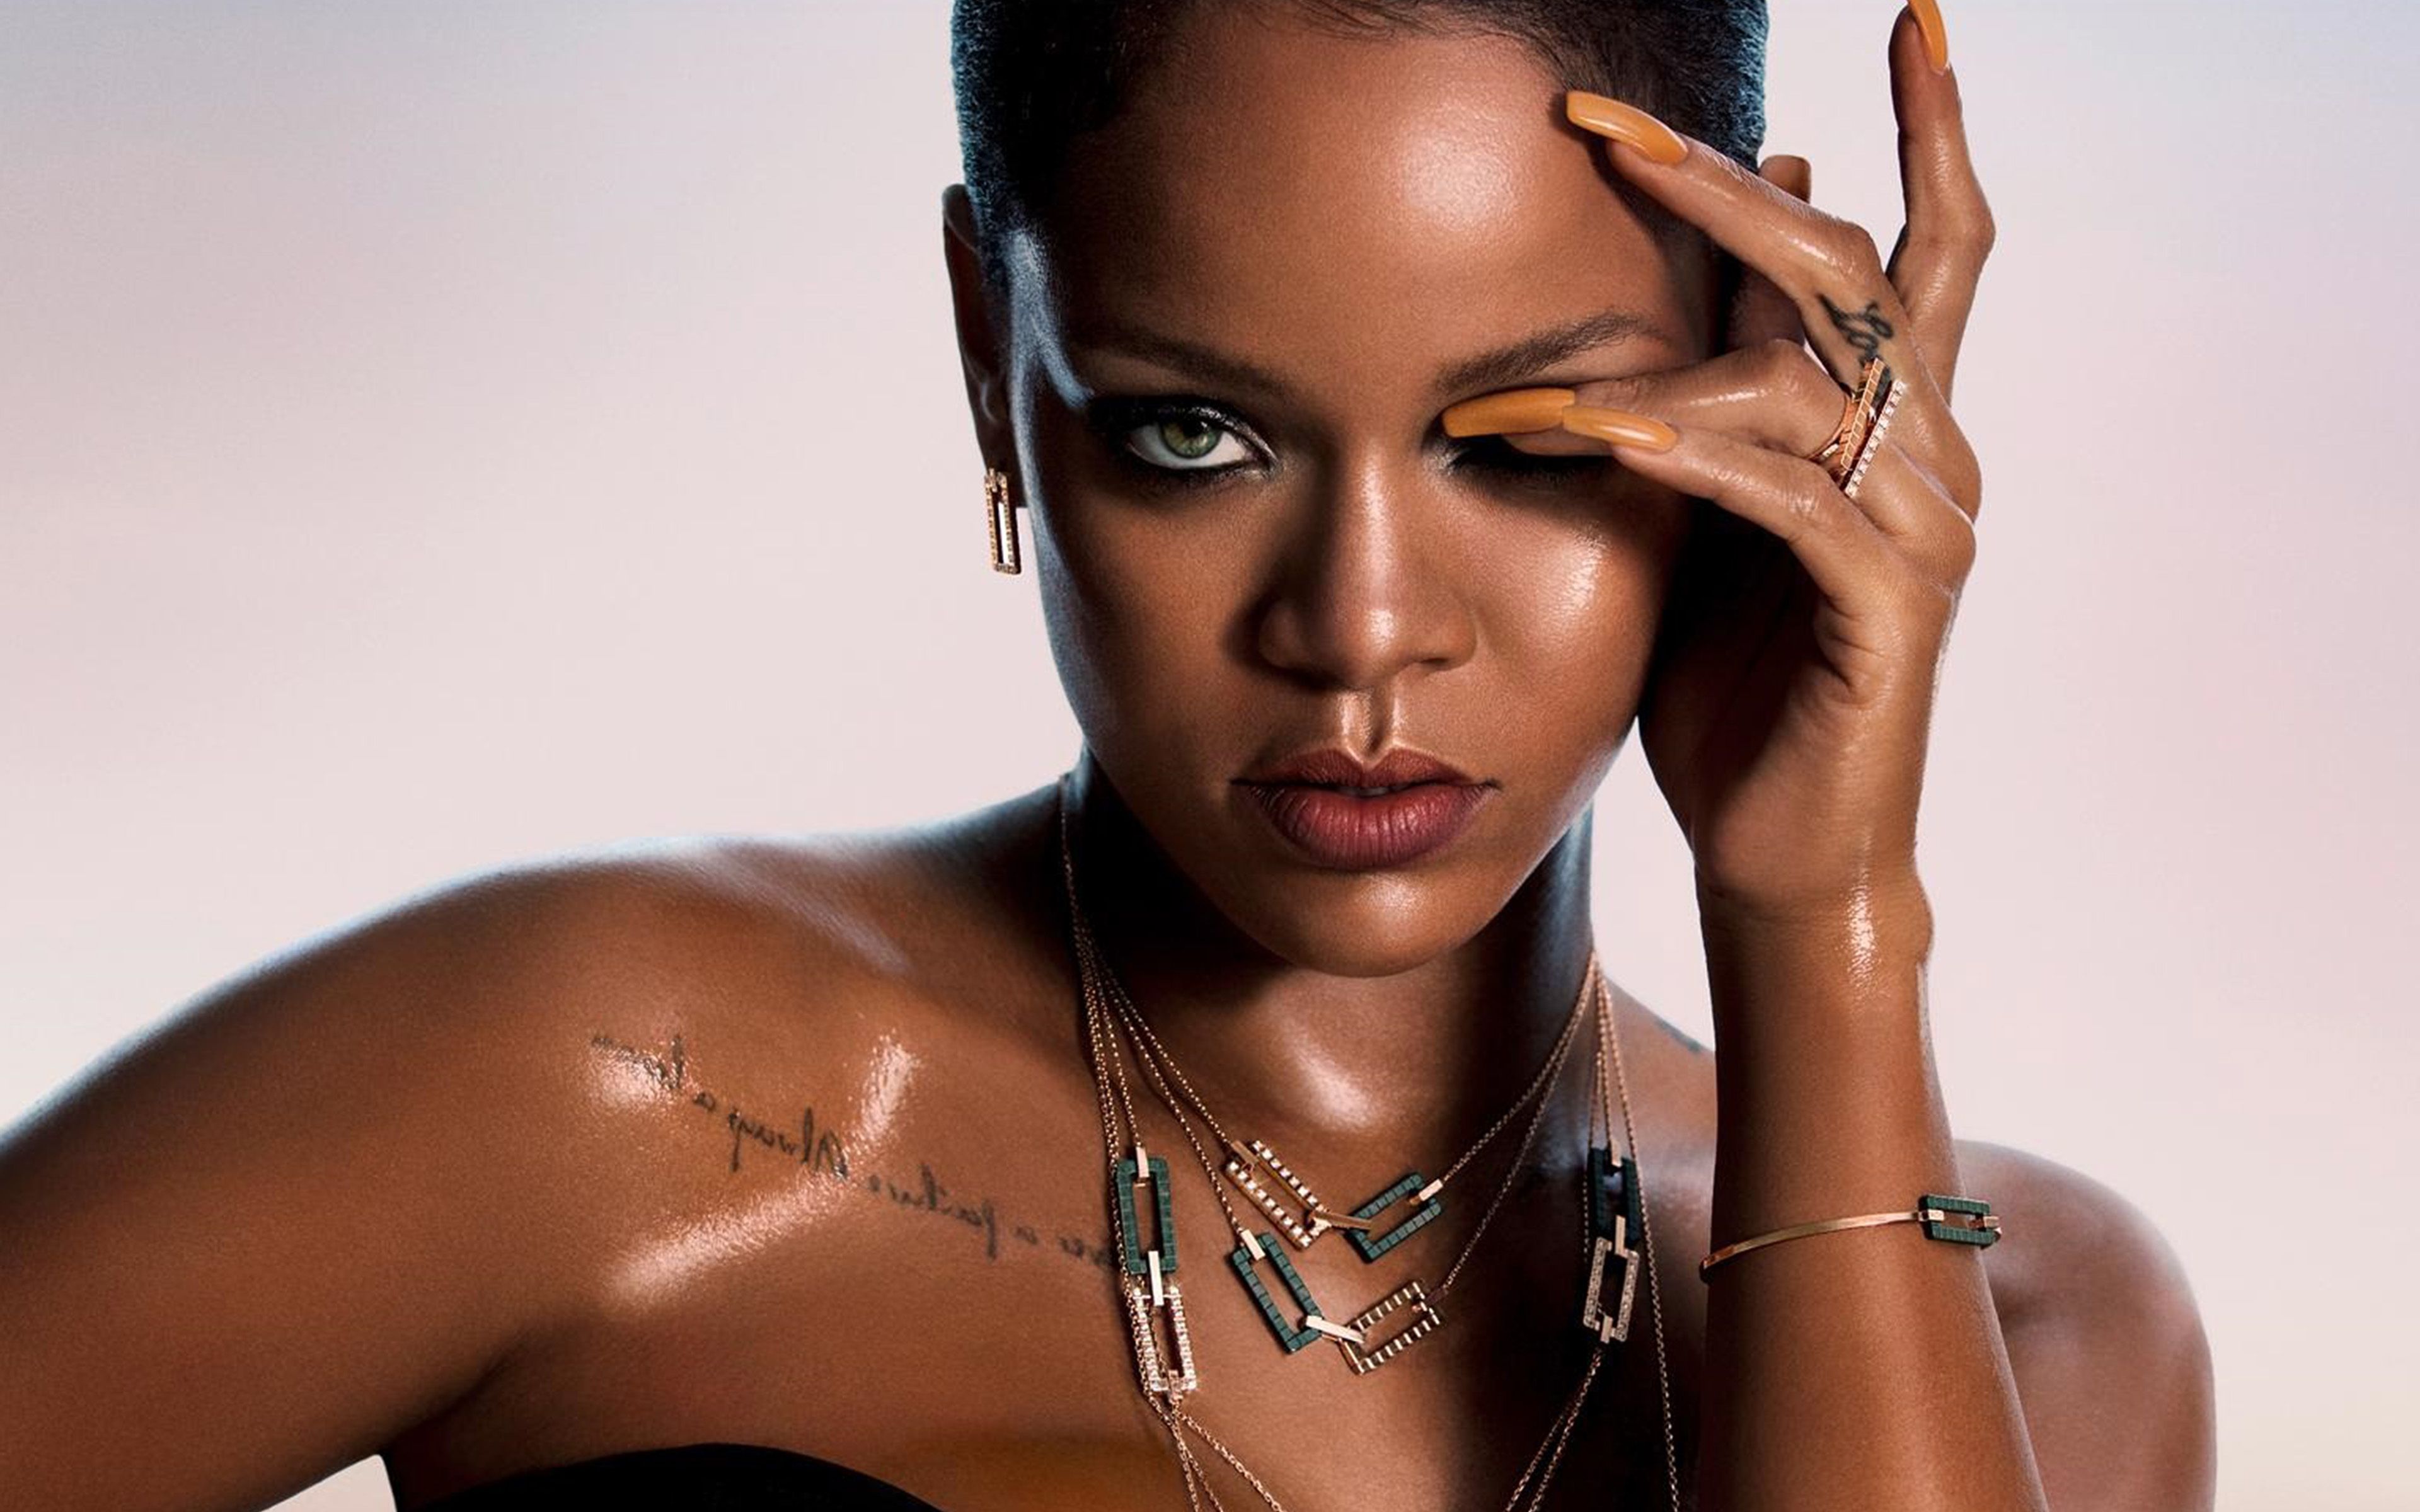 Rihanna Aesthetic Wallpapers